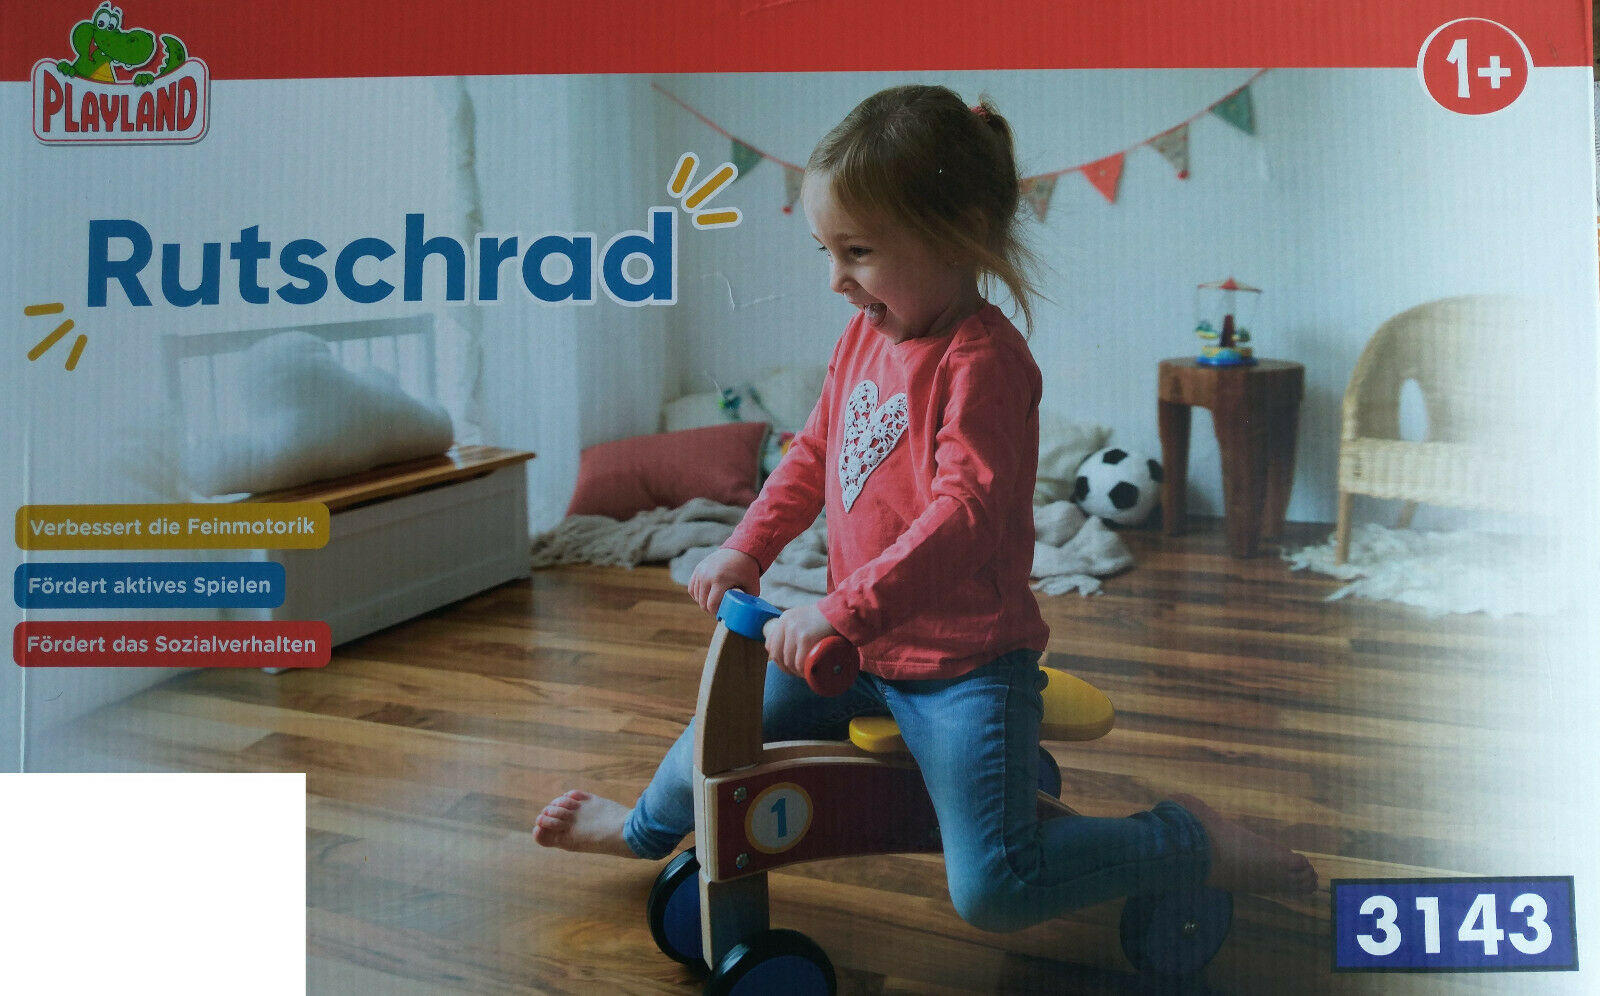 Read more about the article Playland Rutschrad bei Aldi Süd im Angebot